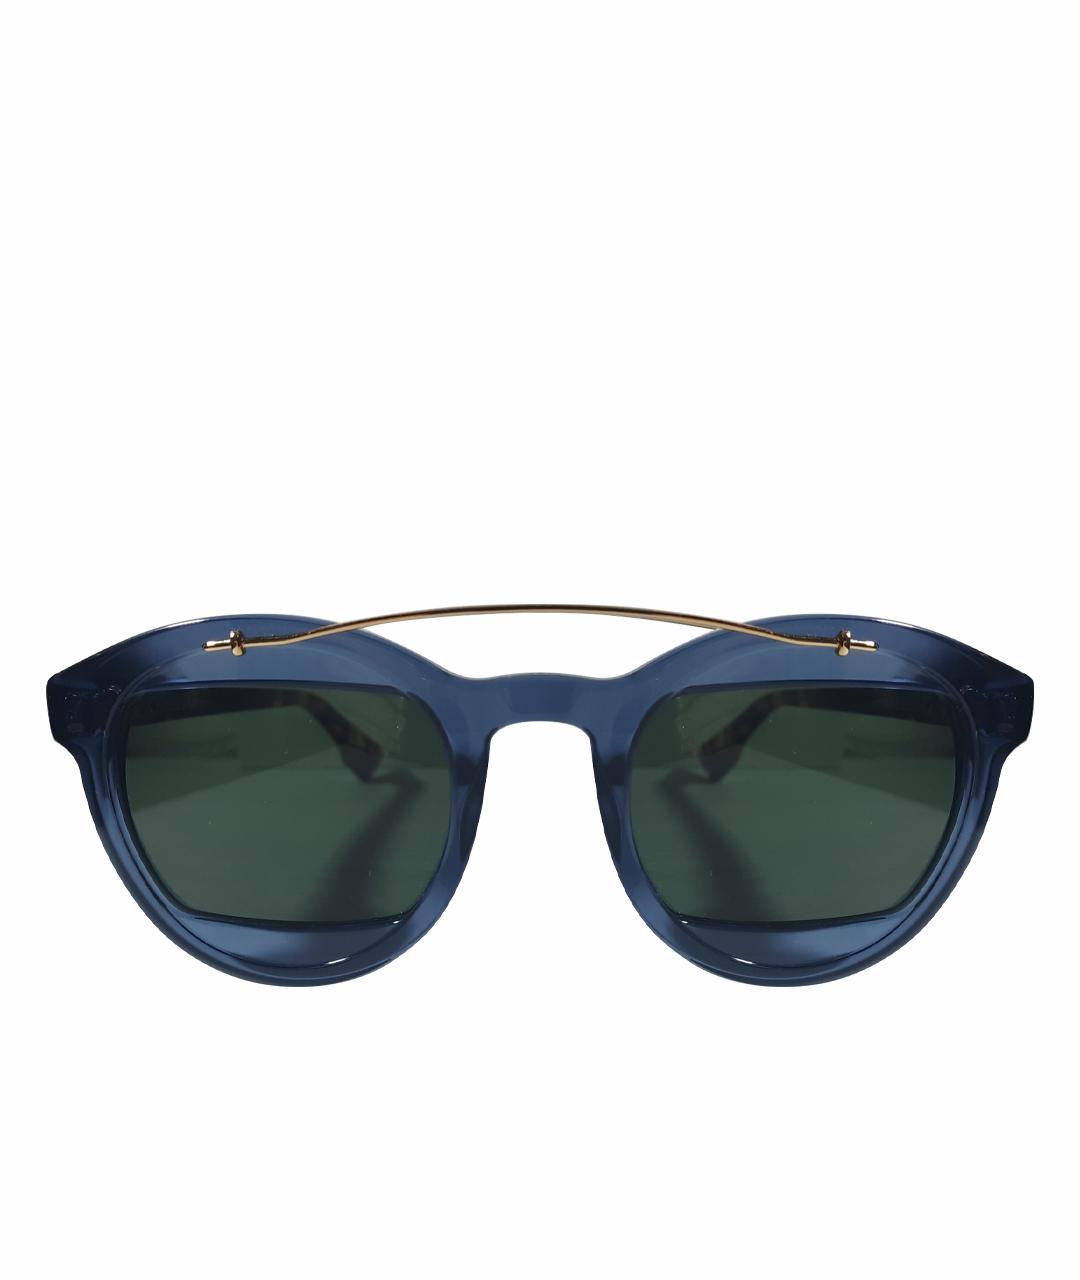 DIOR HOMME Темно-синие пластиковые солнцезащитные очки, фото 1